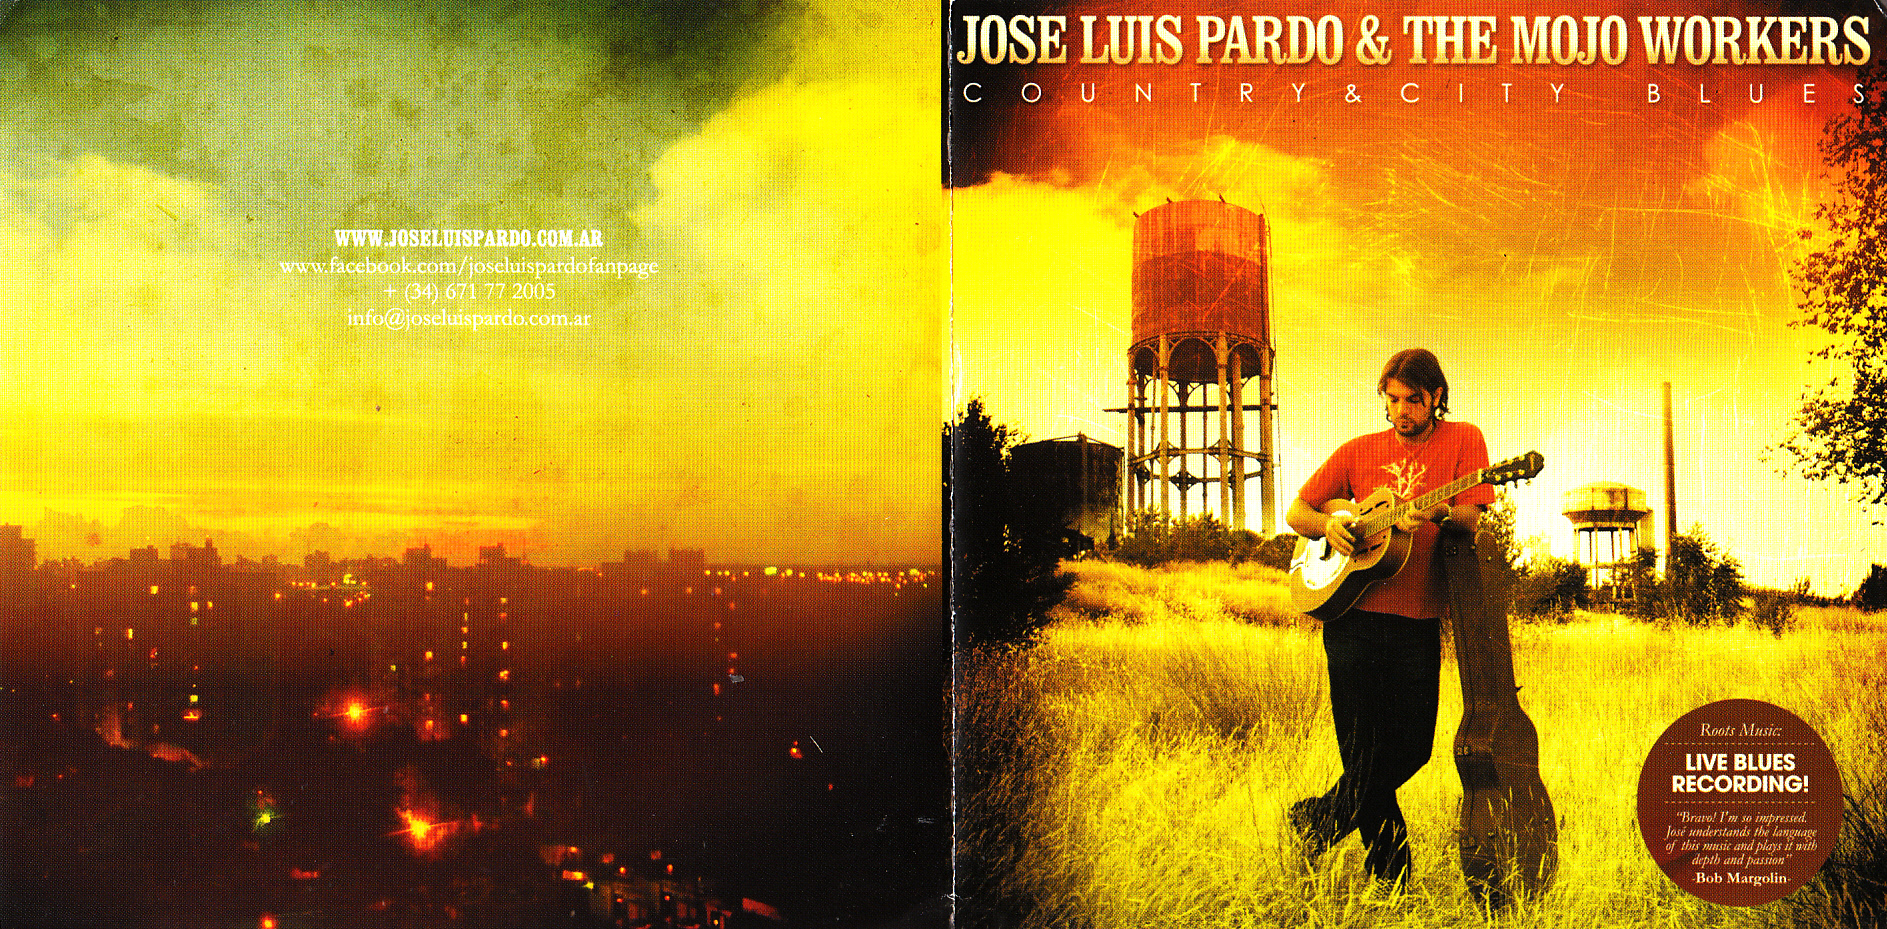 Jose Luis Pardo & The Mojo Workers - Country & City Blues